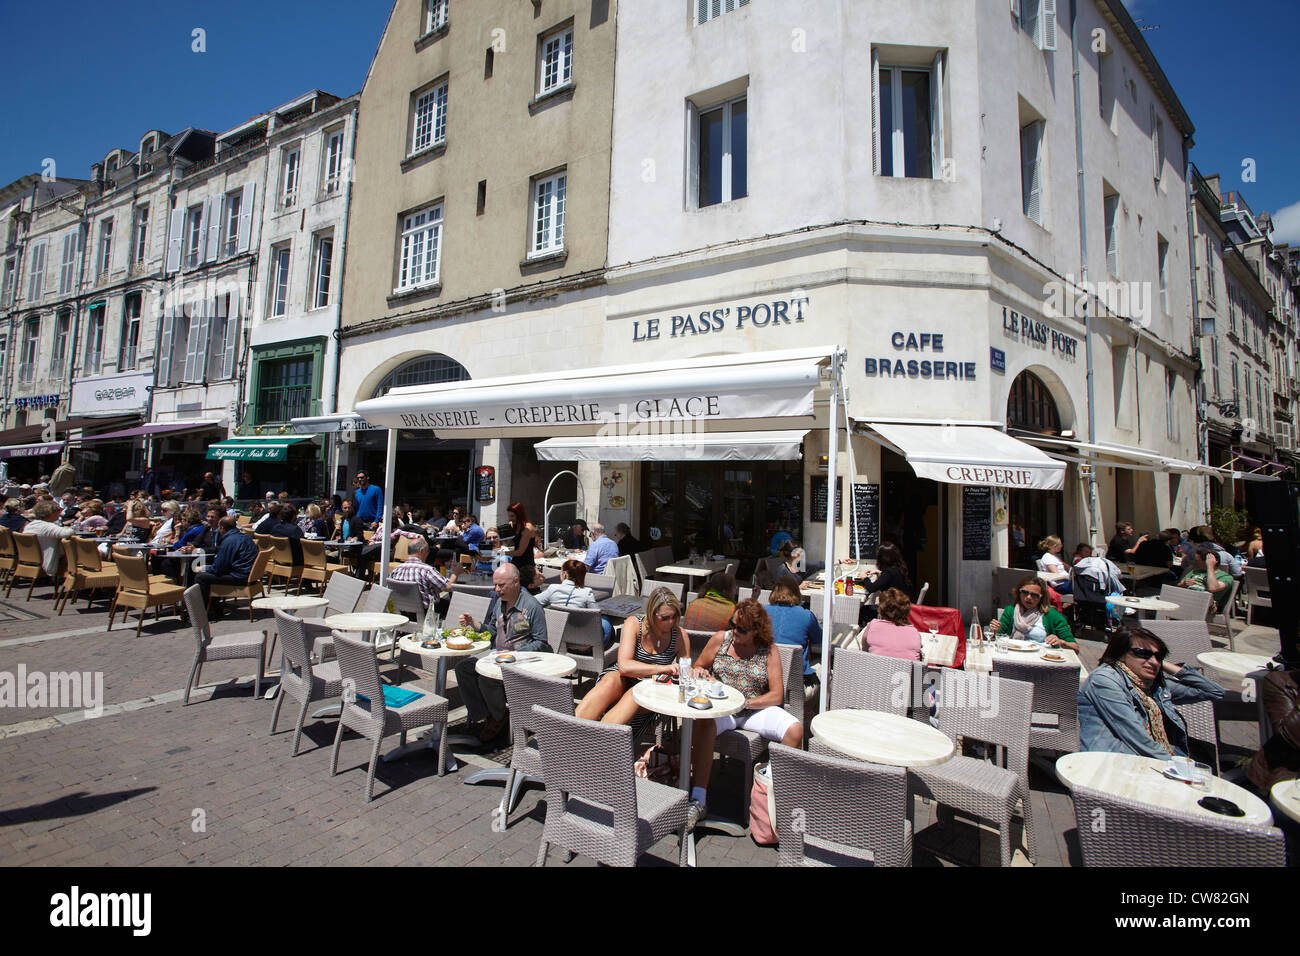 La Rochelle western France Le Pass port brasserie cafe Stock Photo - Alamy